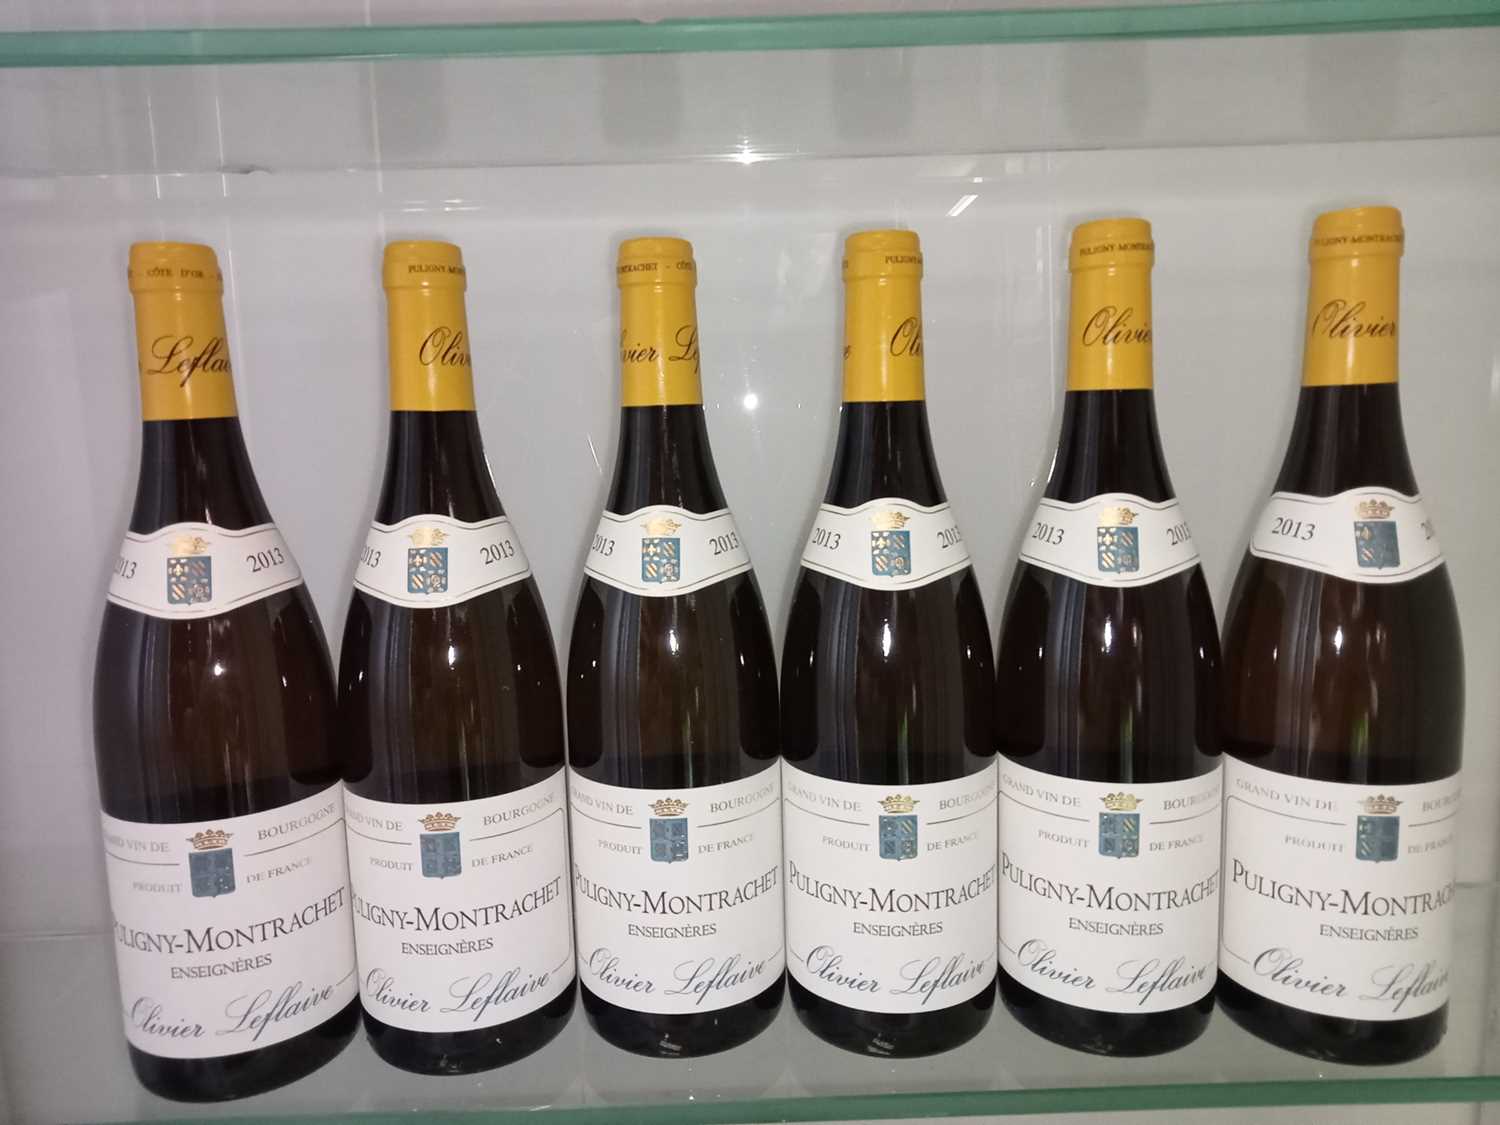 Lot 76 - 12 bottles 2013 Puligny-Montrachet Enseigneres O Leflaive